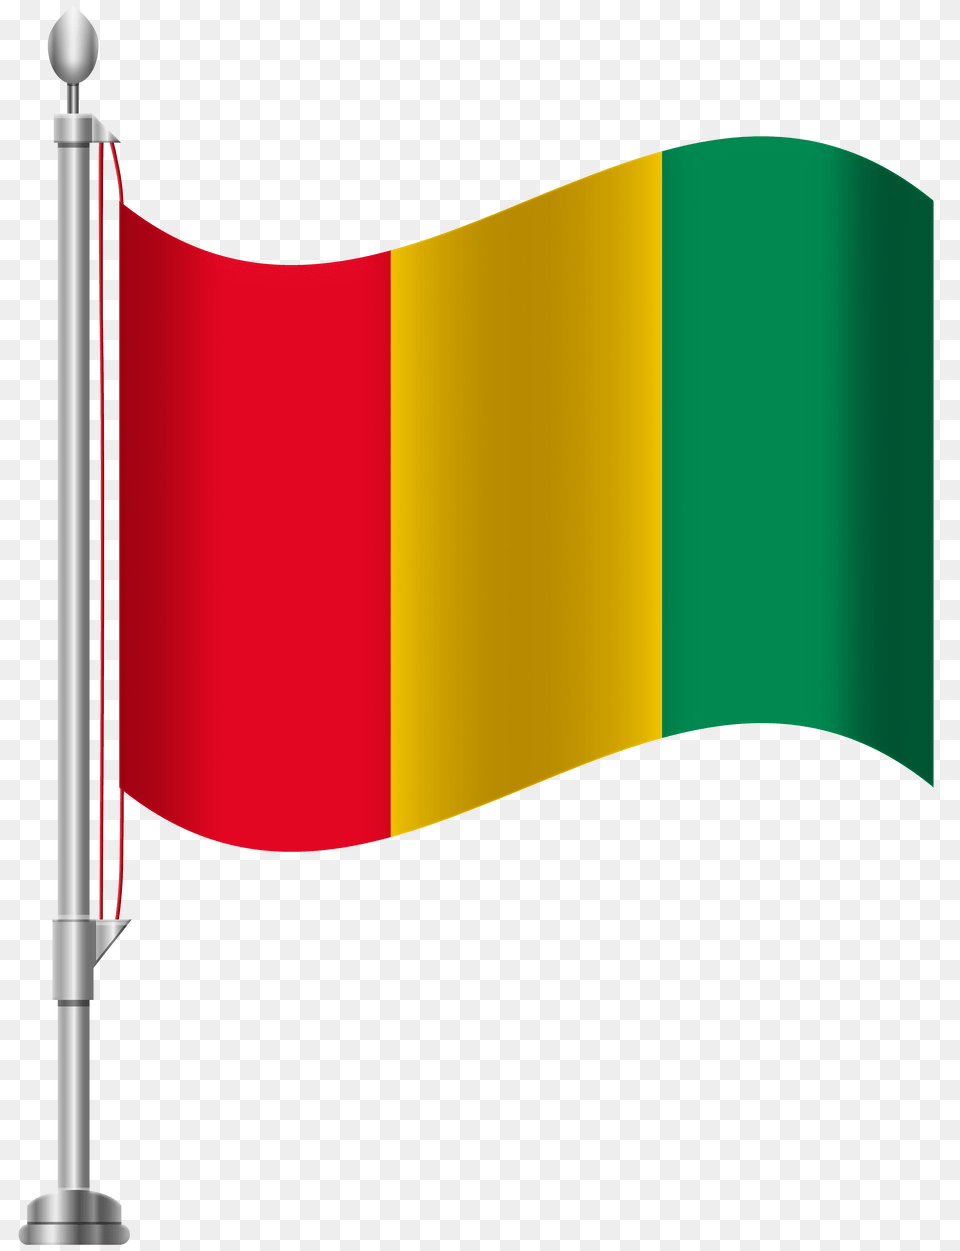 Guinea Flag Clip Art, Smoke Pipe Png Image